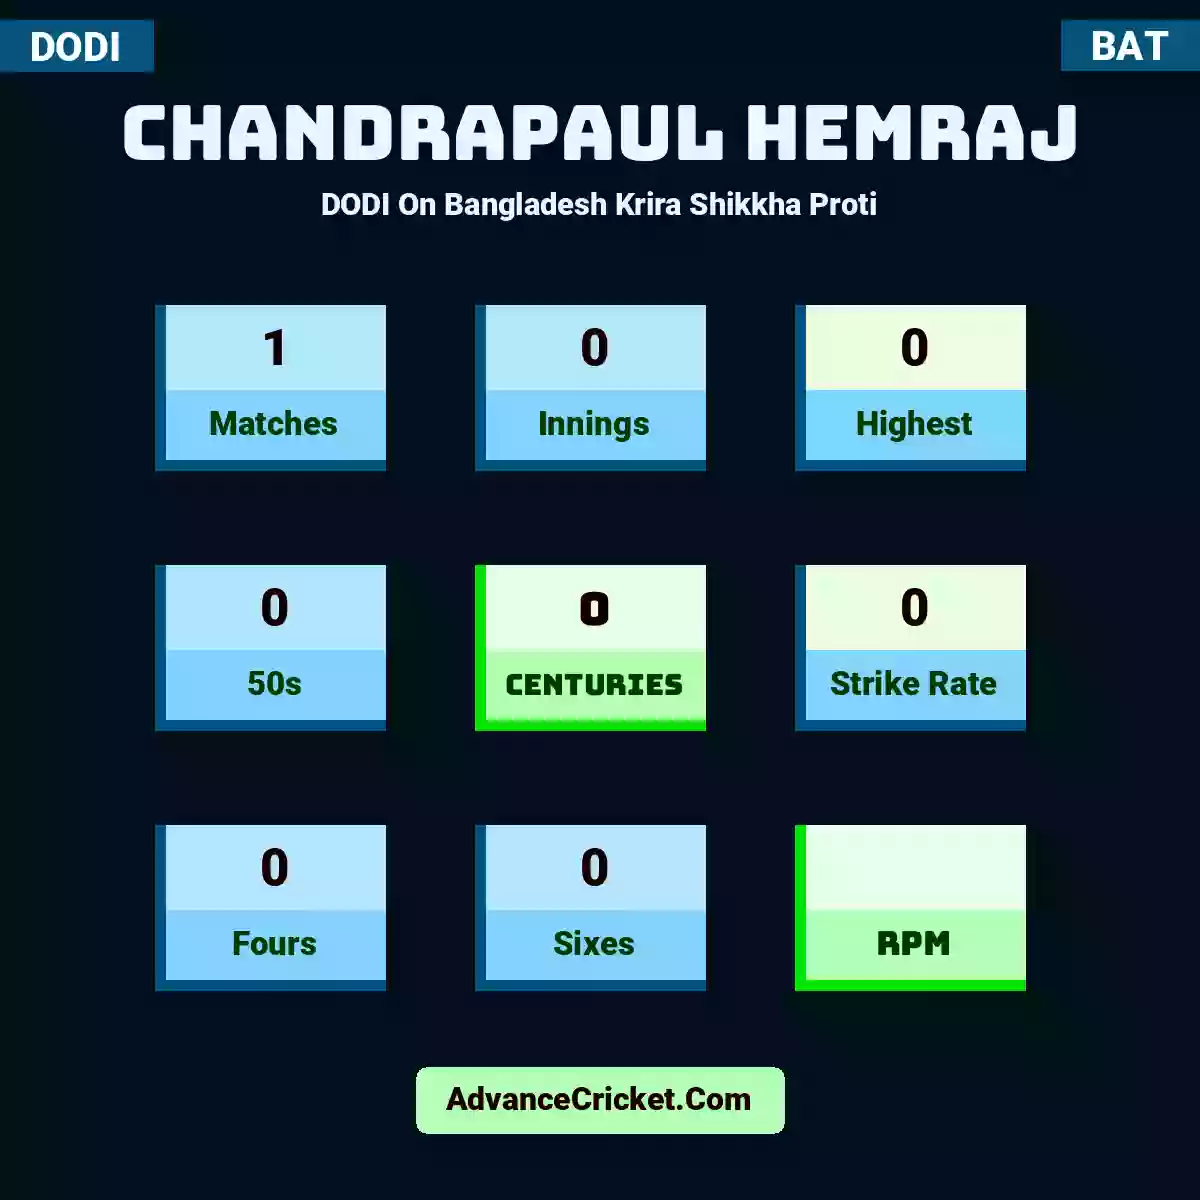 Chandrapaul Hemraj DODI  On Bangladesh Krira Shikkha Proti, Chandrapaul Hemraj played 1 matches, scored 0 runs as highest, 0 half-centuries, and 0 centuries, with a strike rate of 0. C.Hemraj hit 0 fours and 0 sixes.